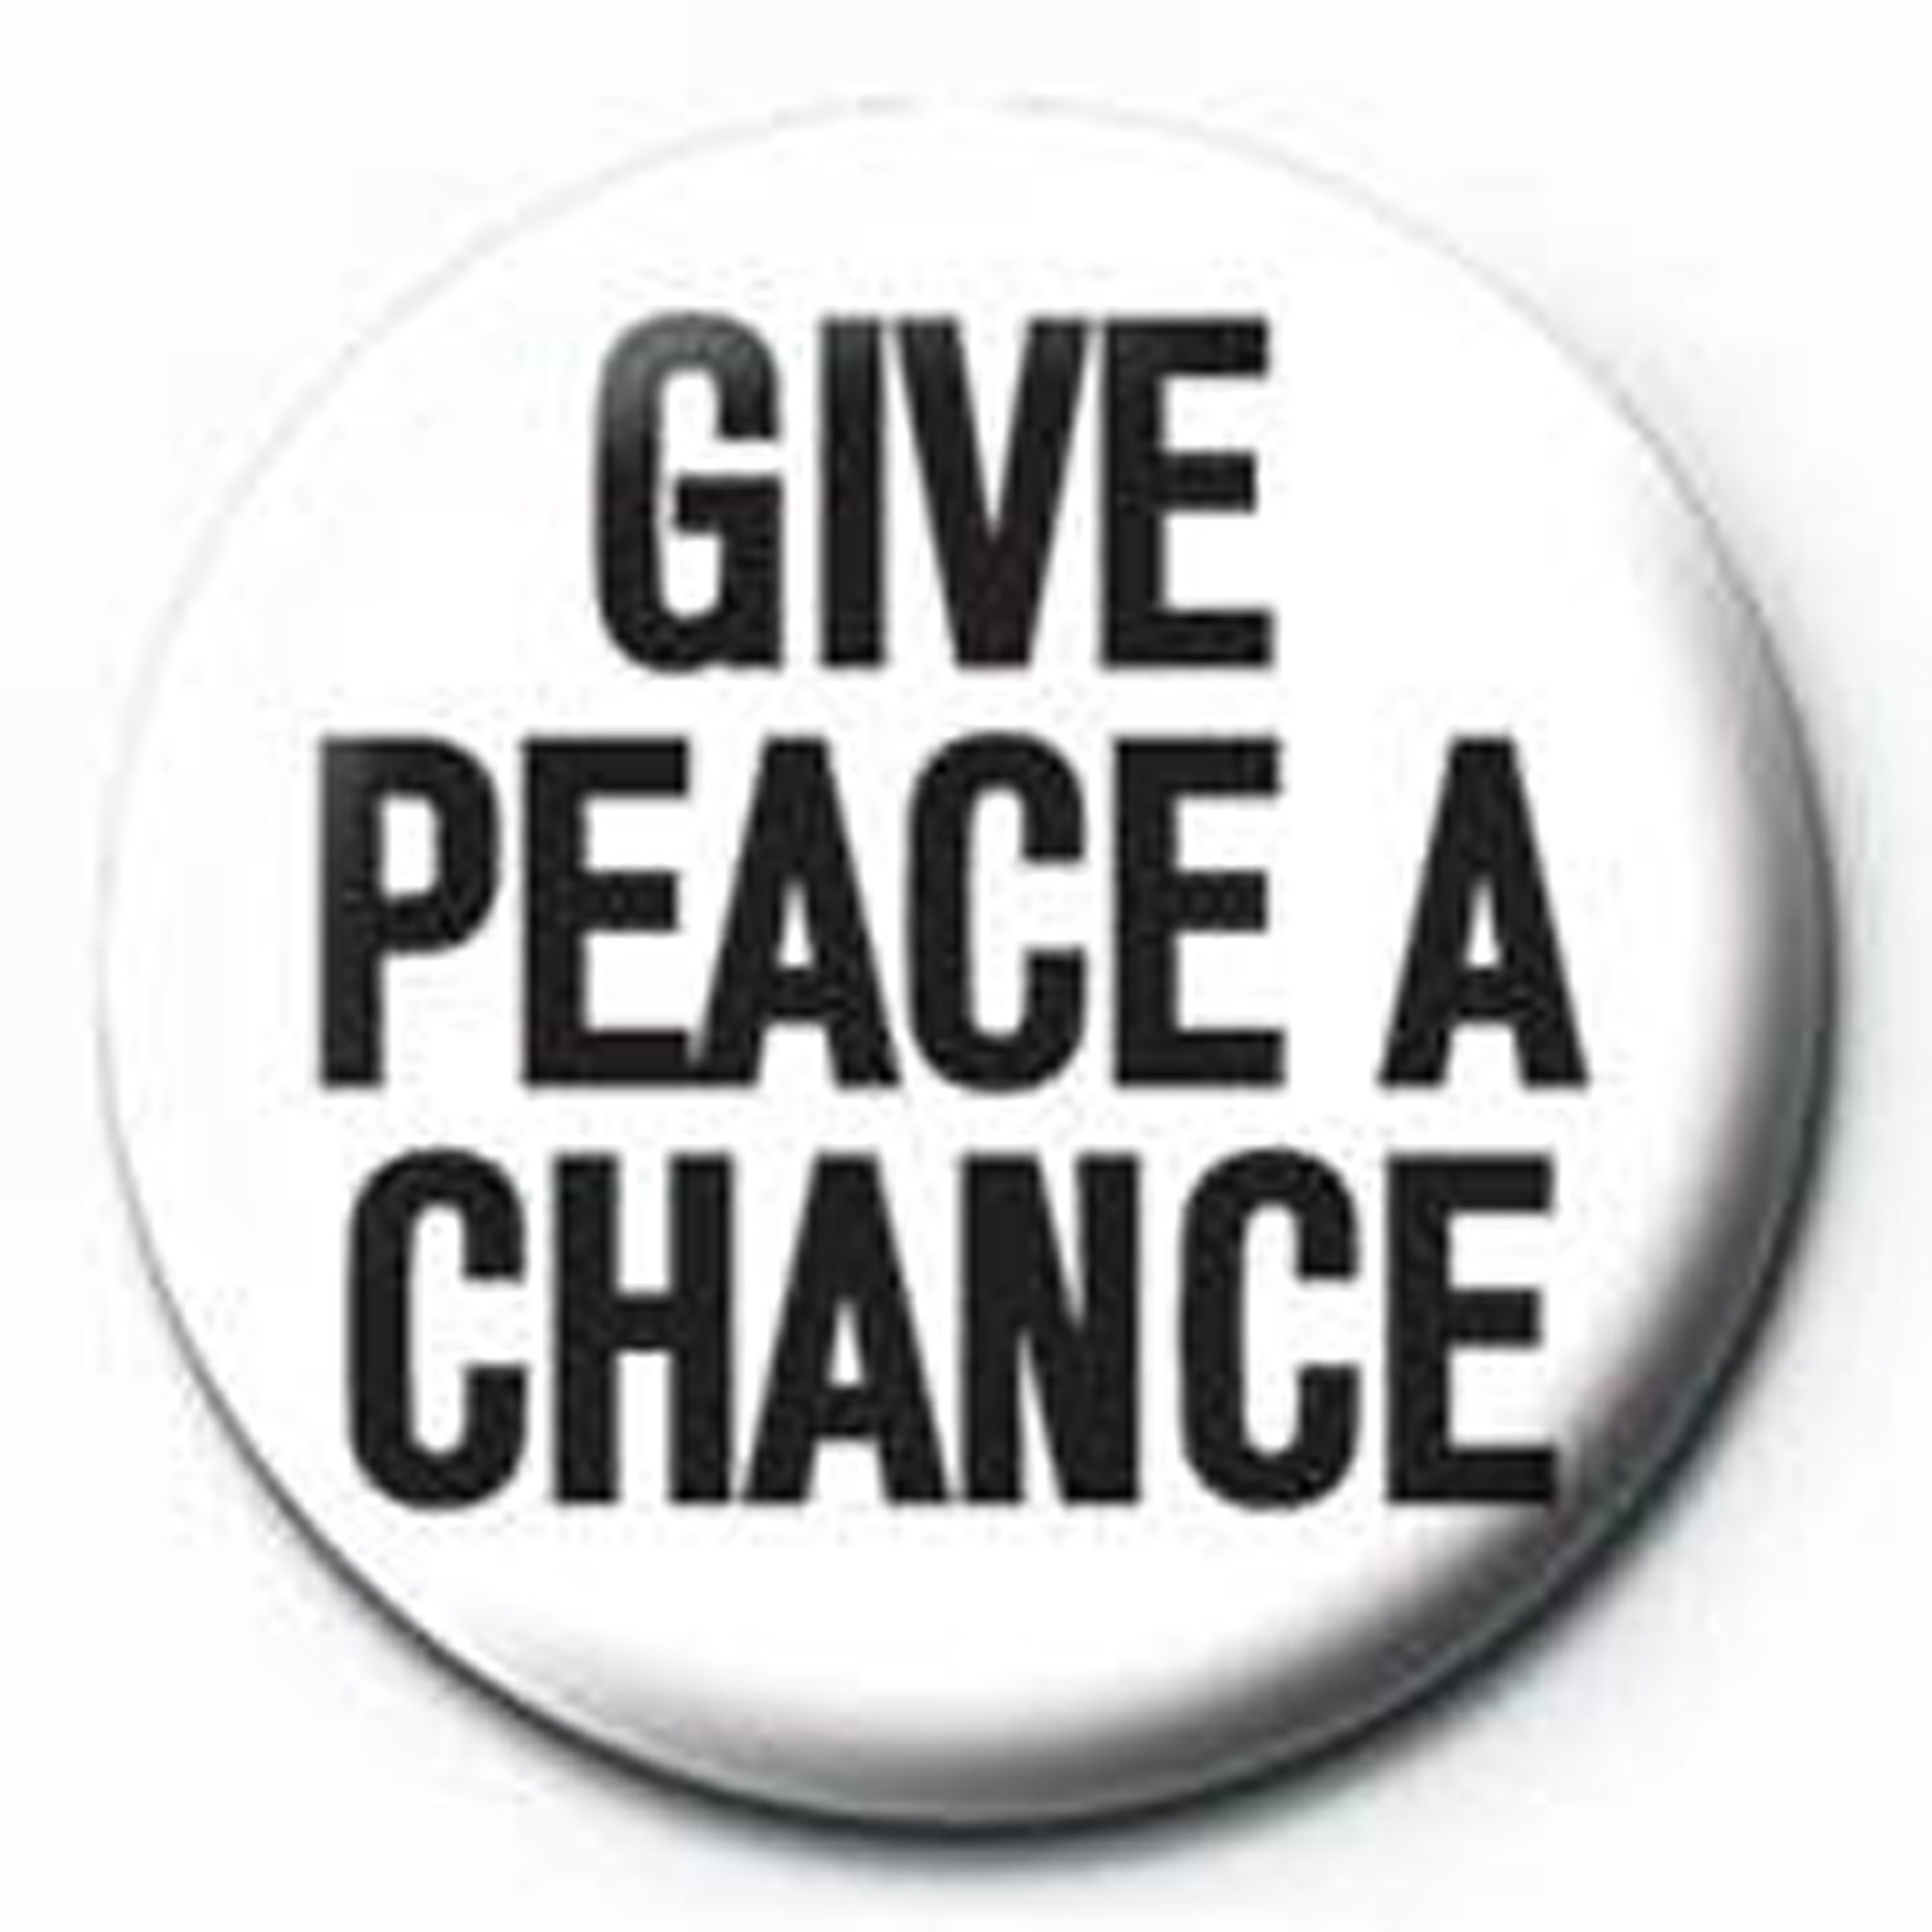 Fun a Give peace - chance